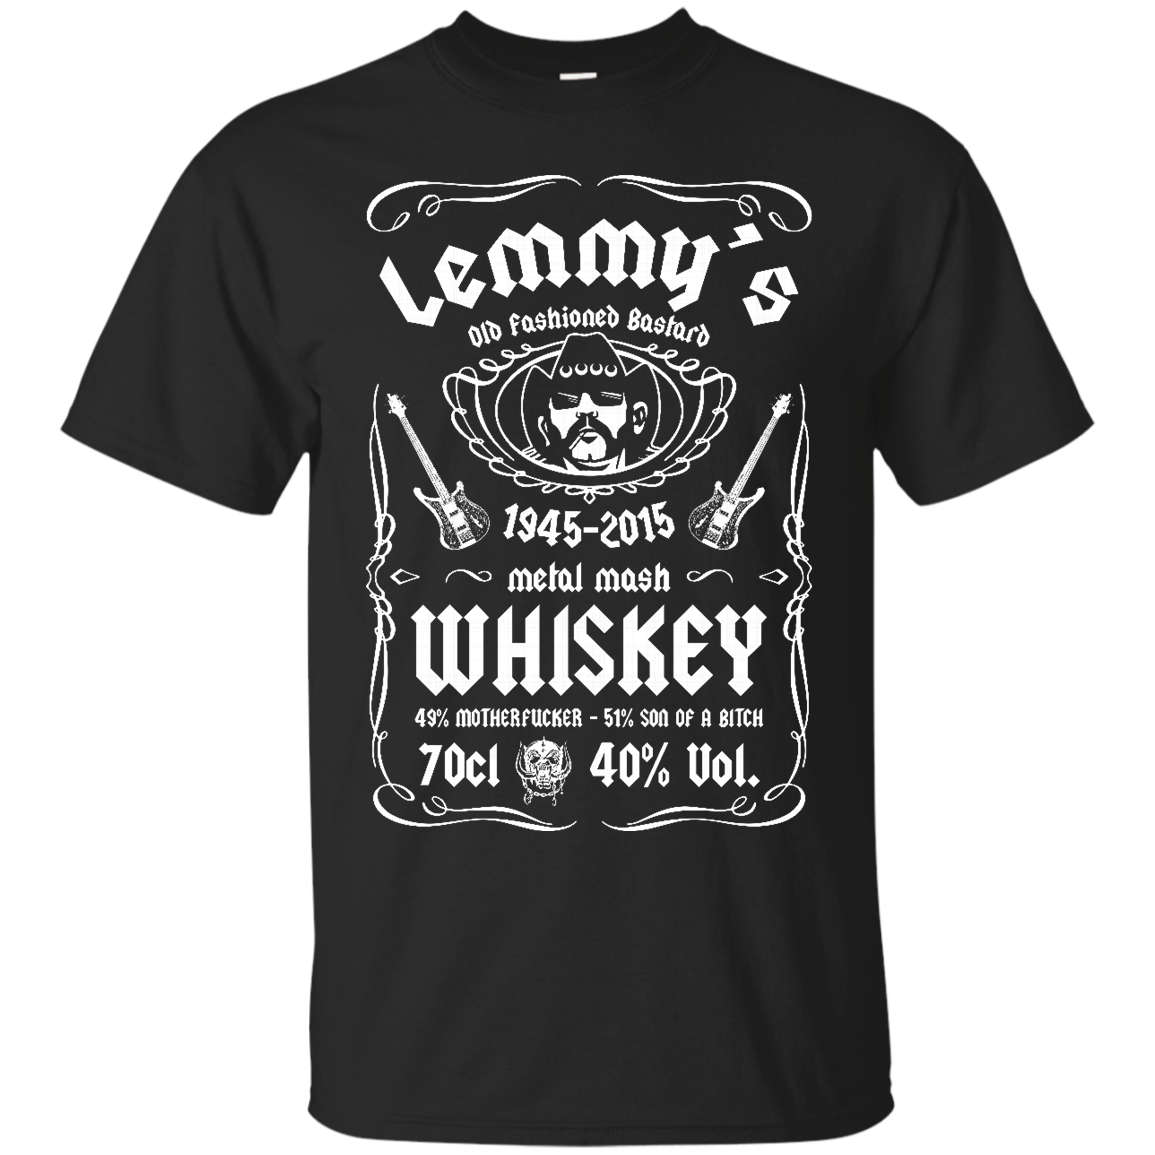 Lemmy Kilmister Whiskey Shirts Metal Mash - Teesmiley